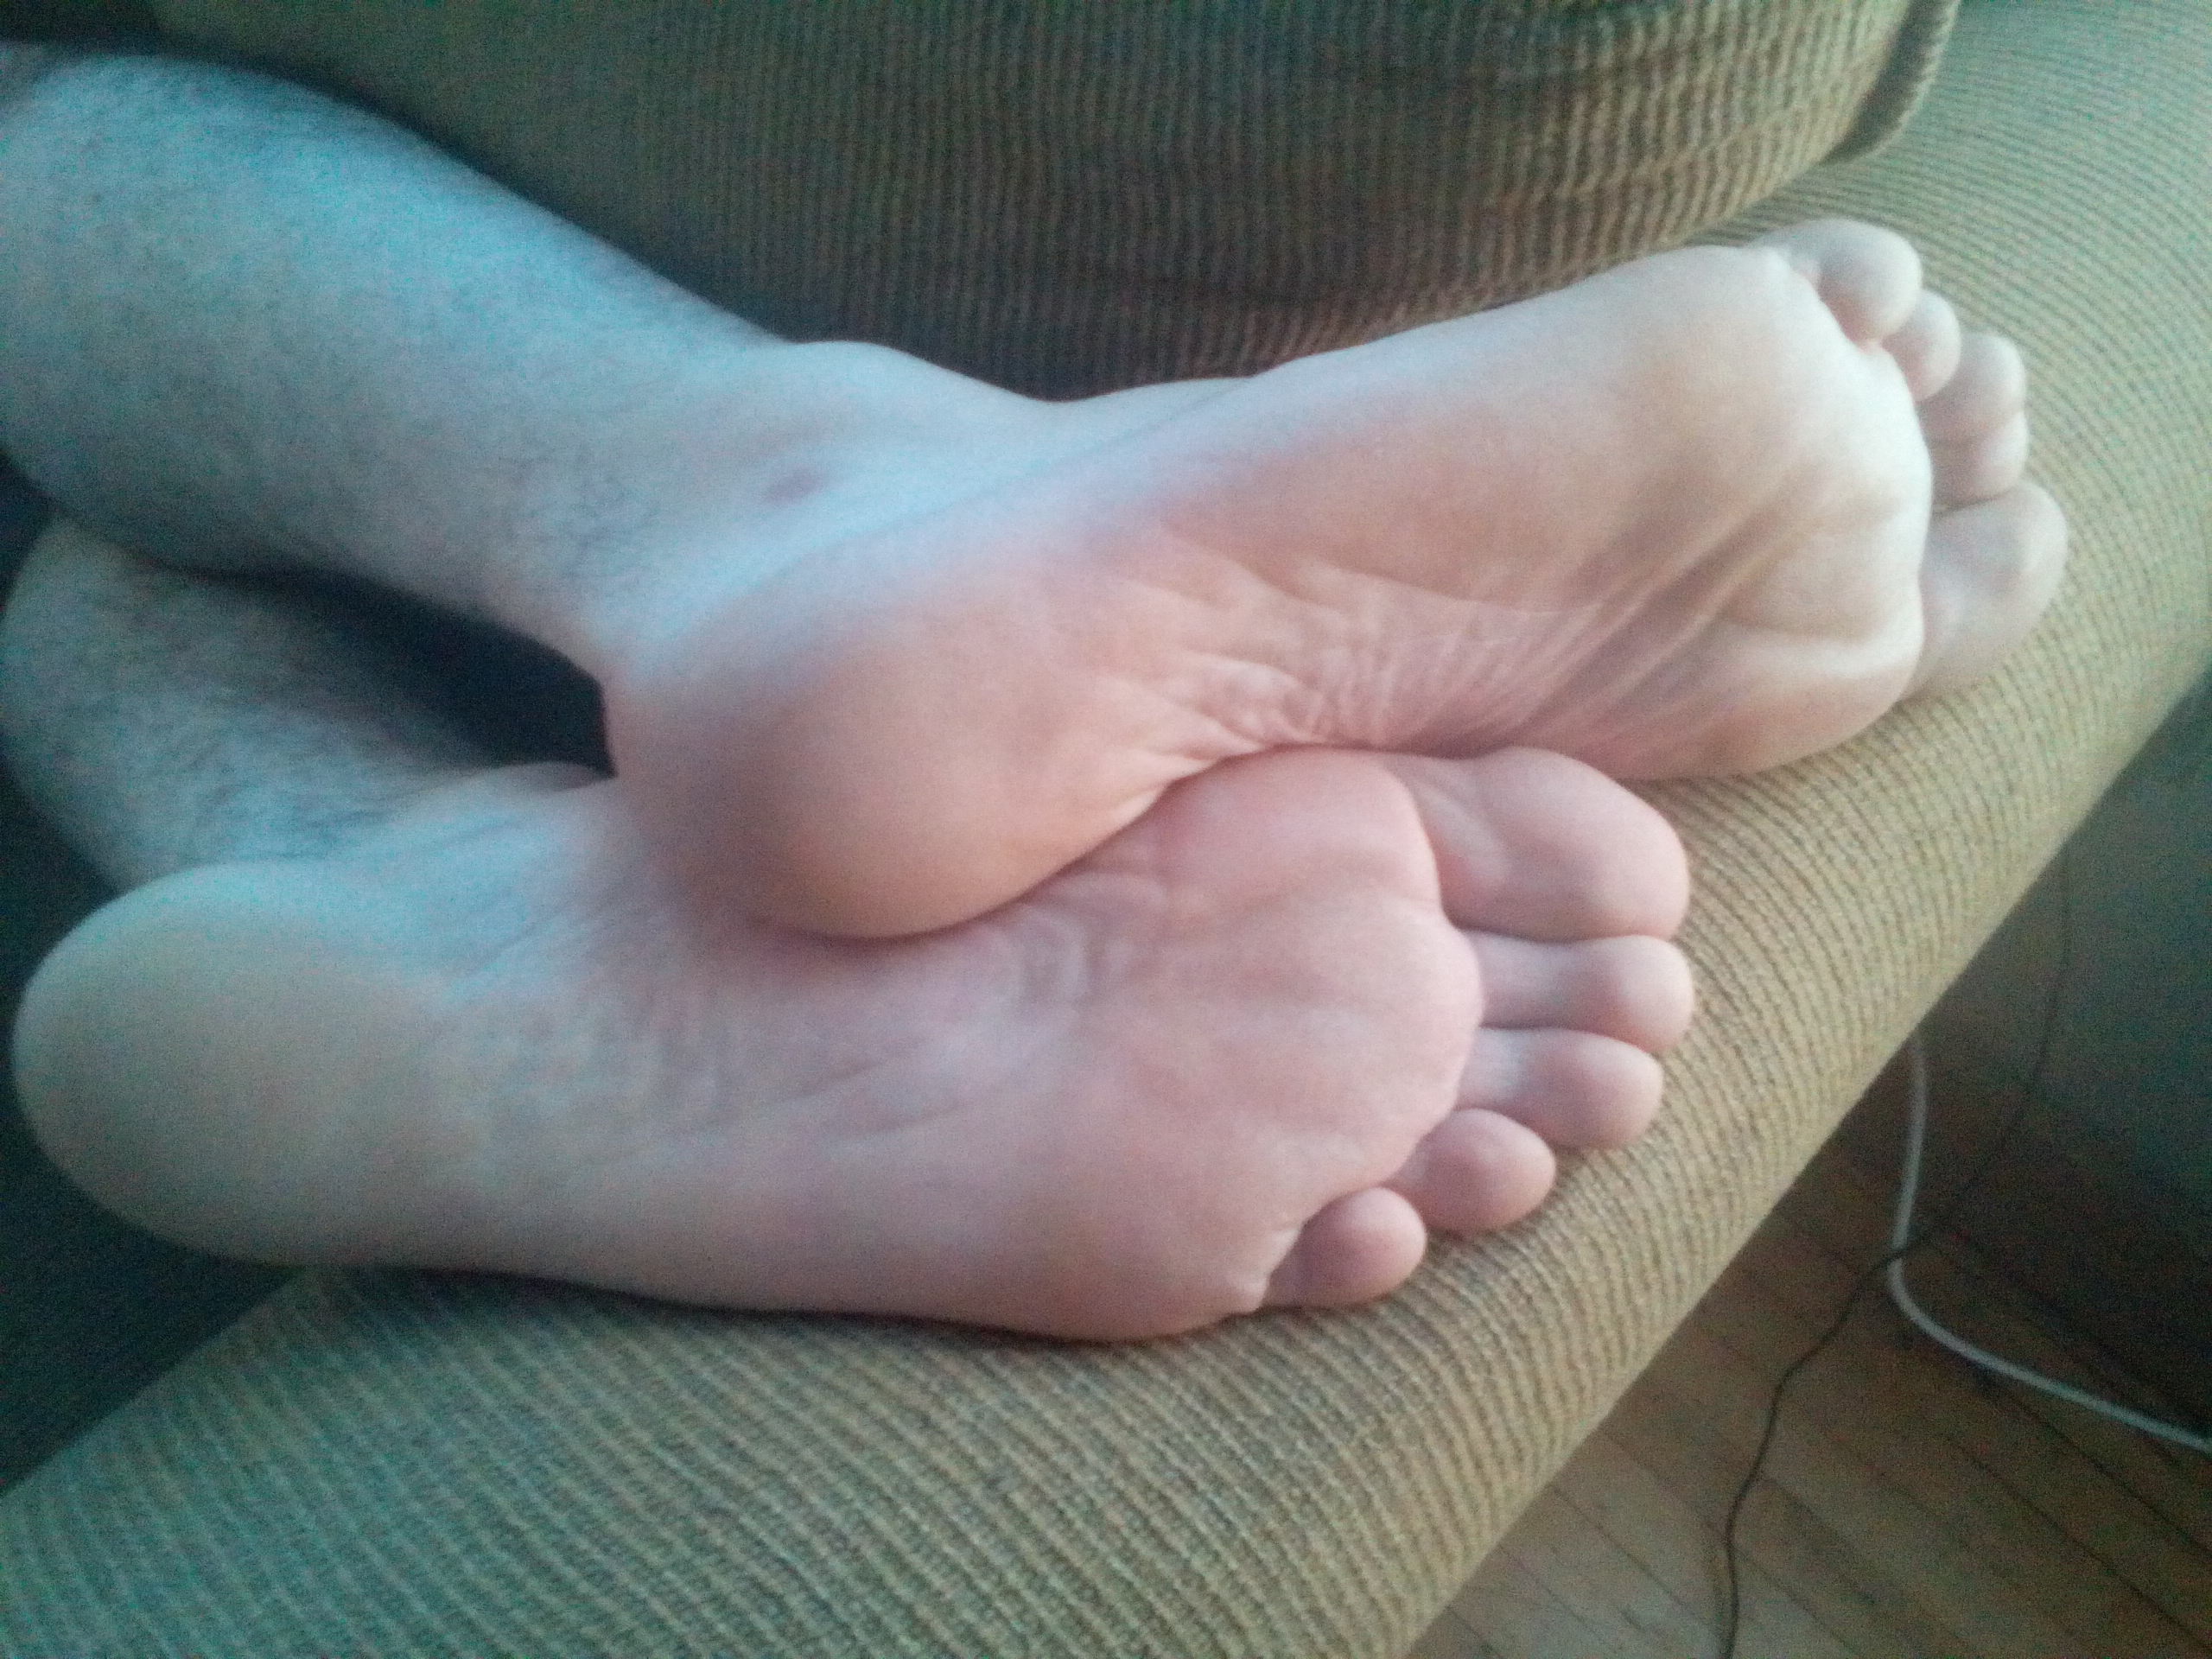 Husband's feet